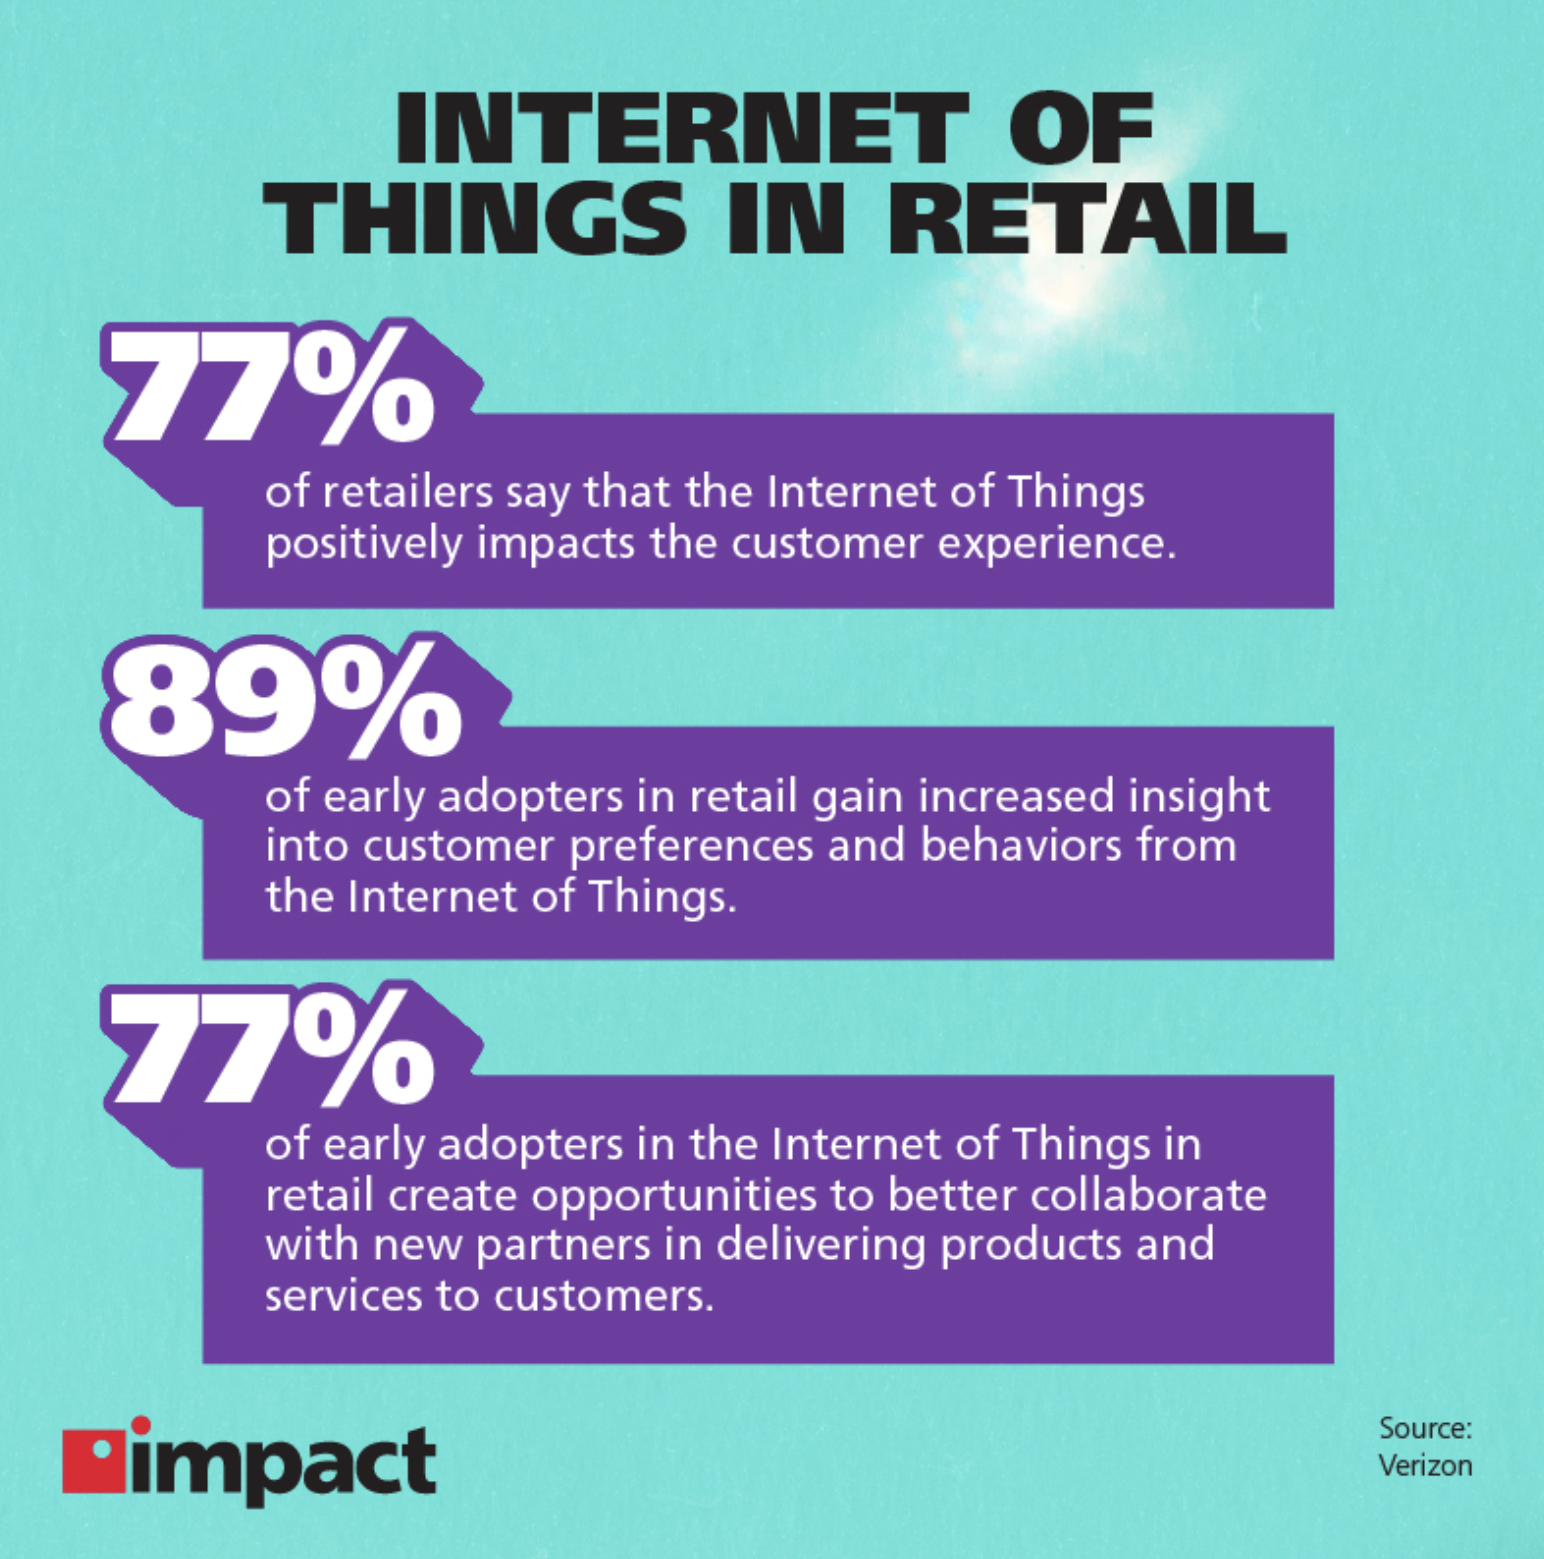 Internet Of Things in retail